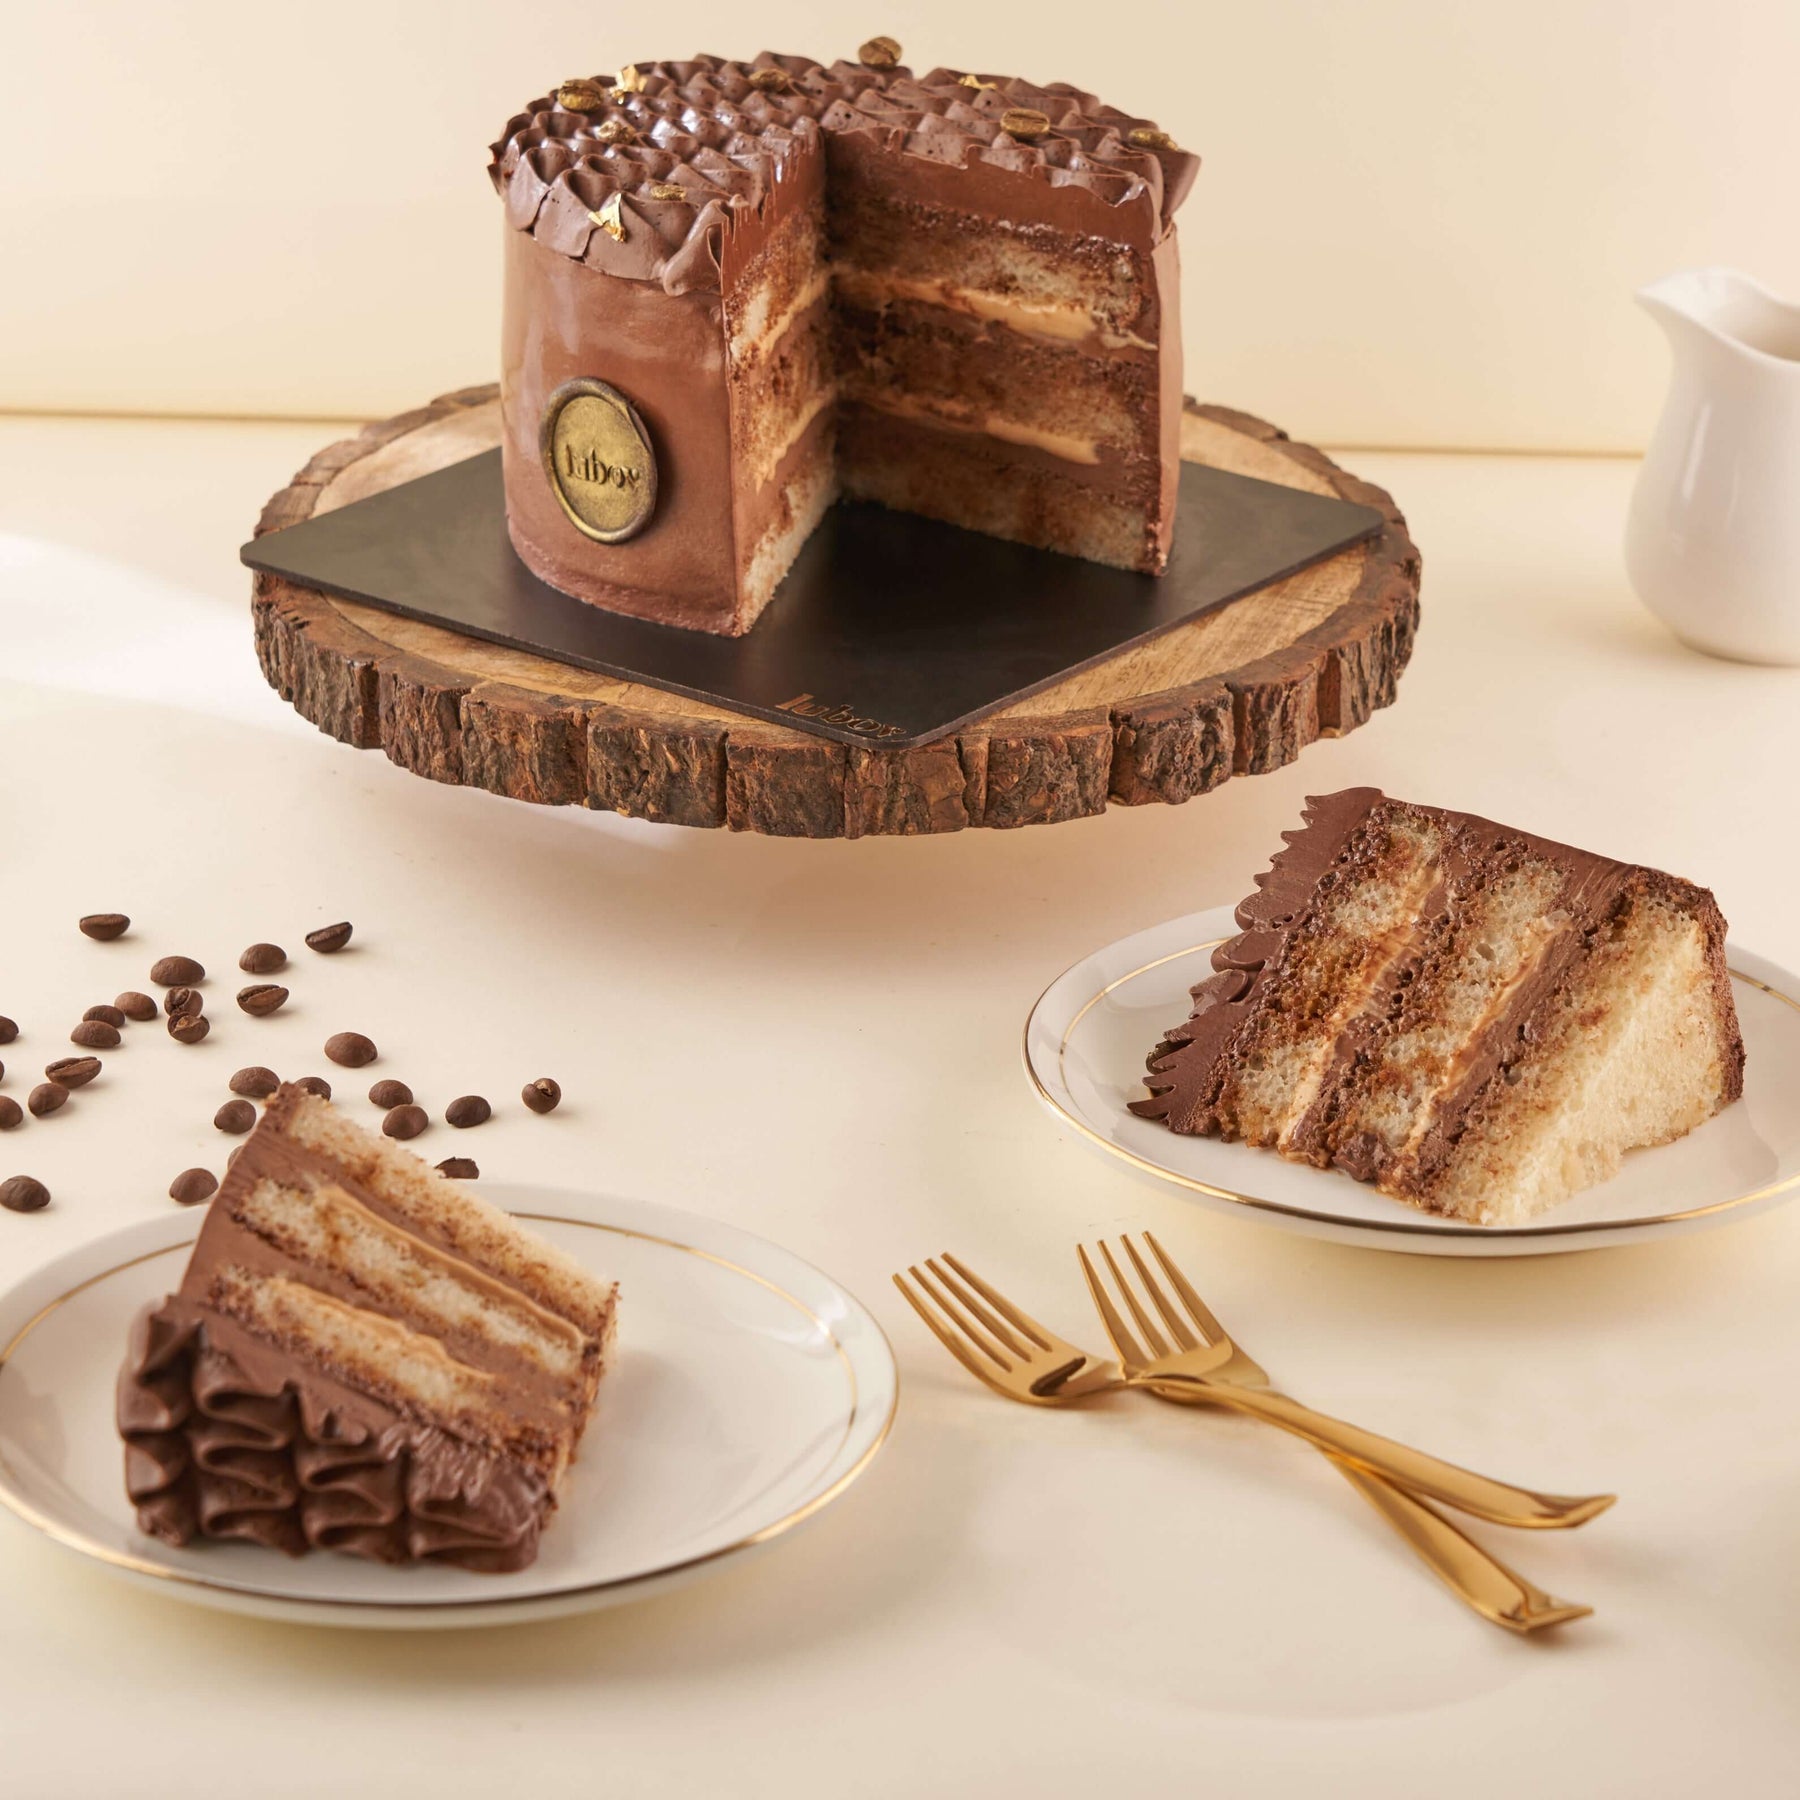 Coffee Caramel Cream Brulee Mousse Cake Stock Image - Image of closeup,  chocolate: 86122185